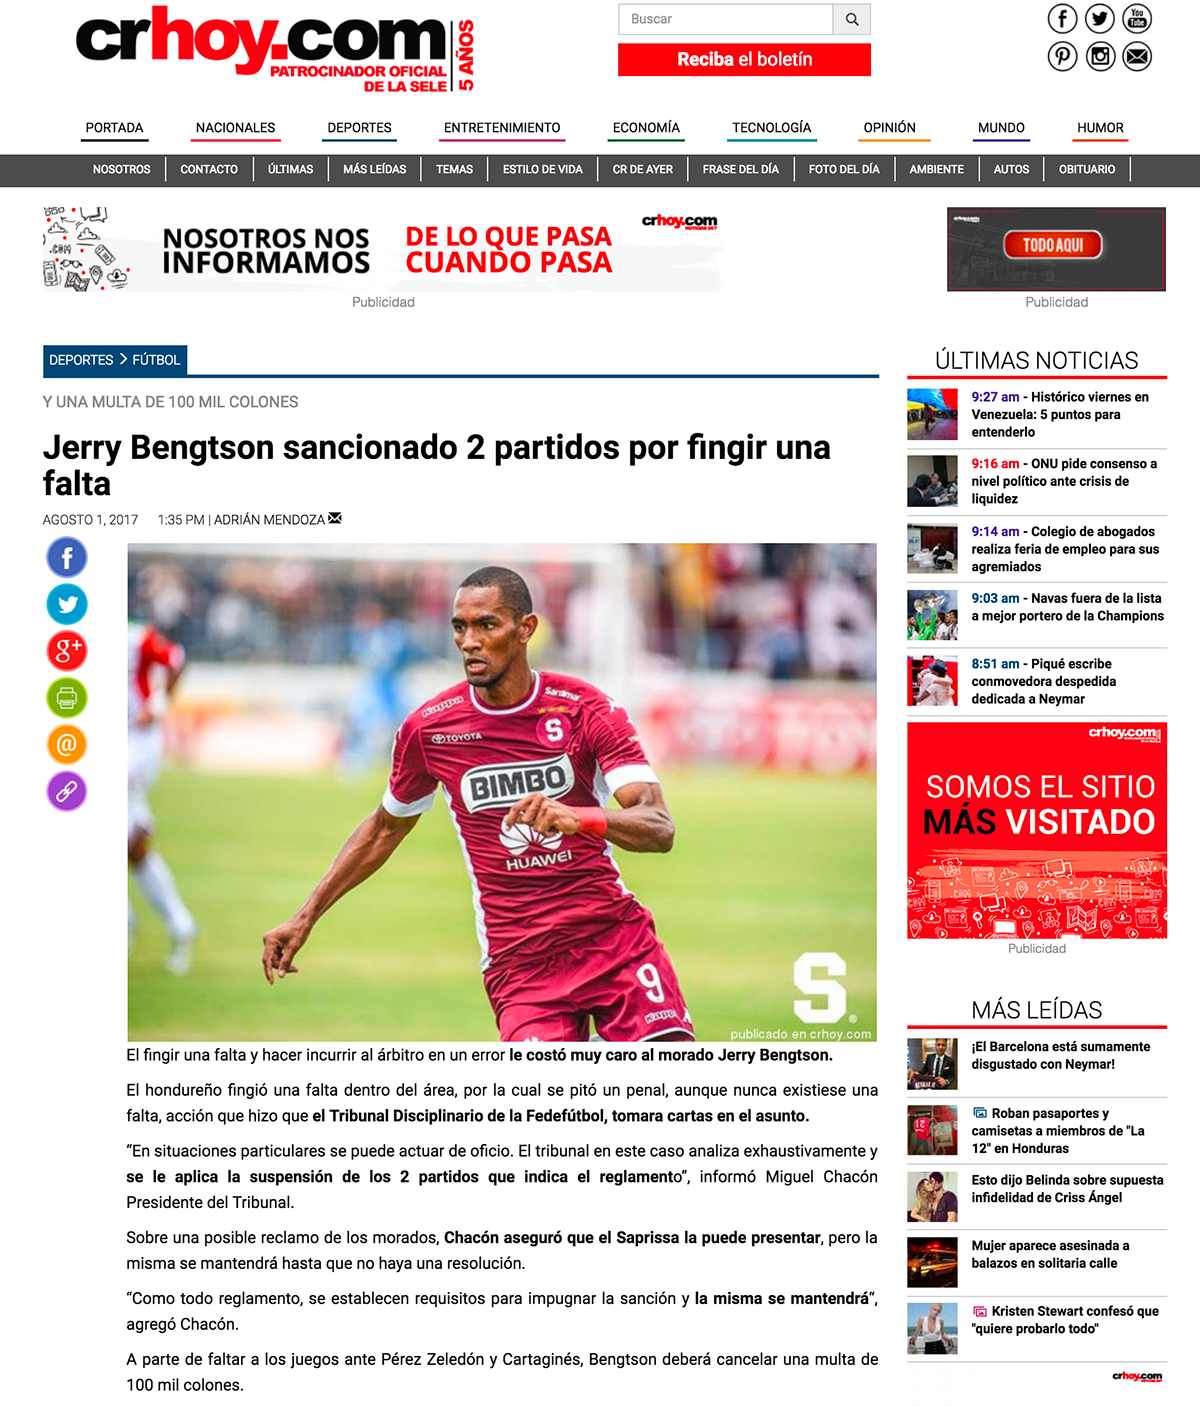 PMEimages Saprissa sports Photo media Express clients editorial news media Publications